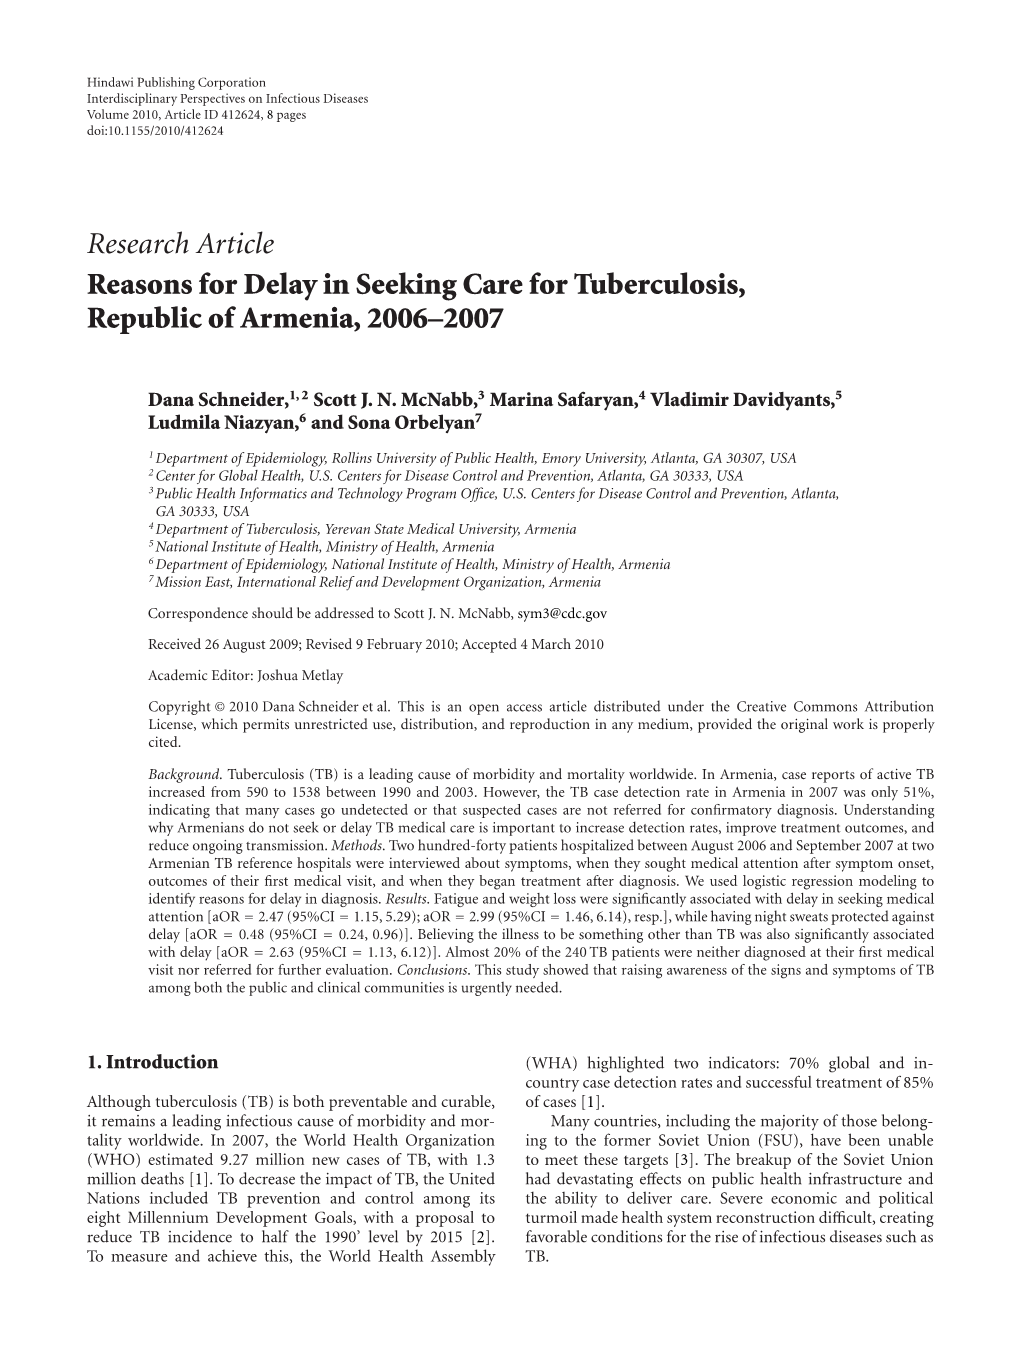 Reasons for Delay in Seeking Care for Tuberculosis, Republic of Armenia, 2006–2007